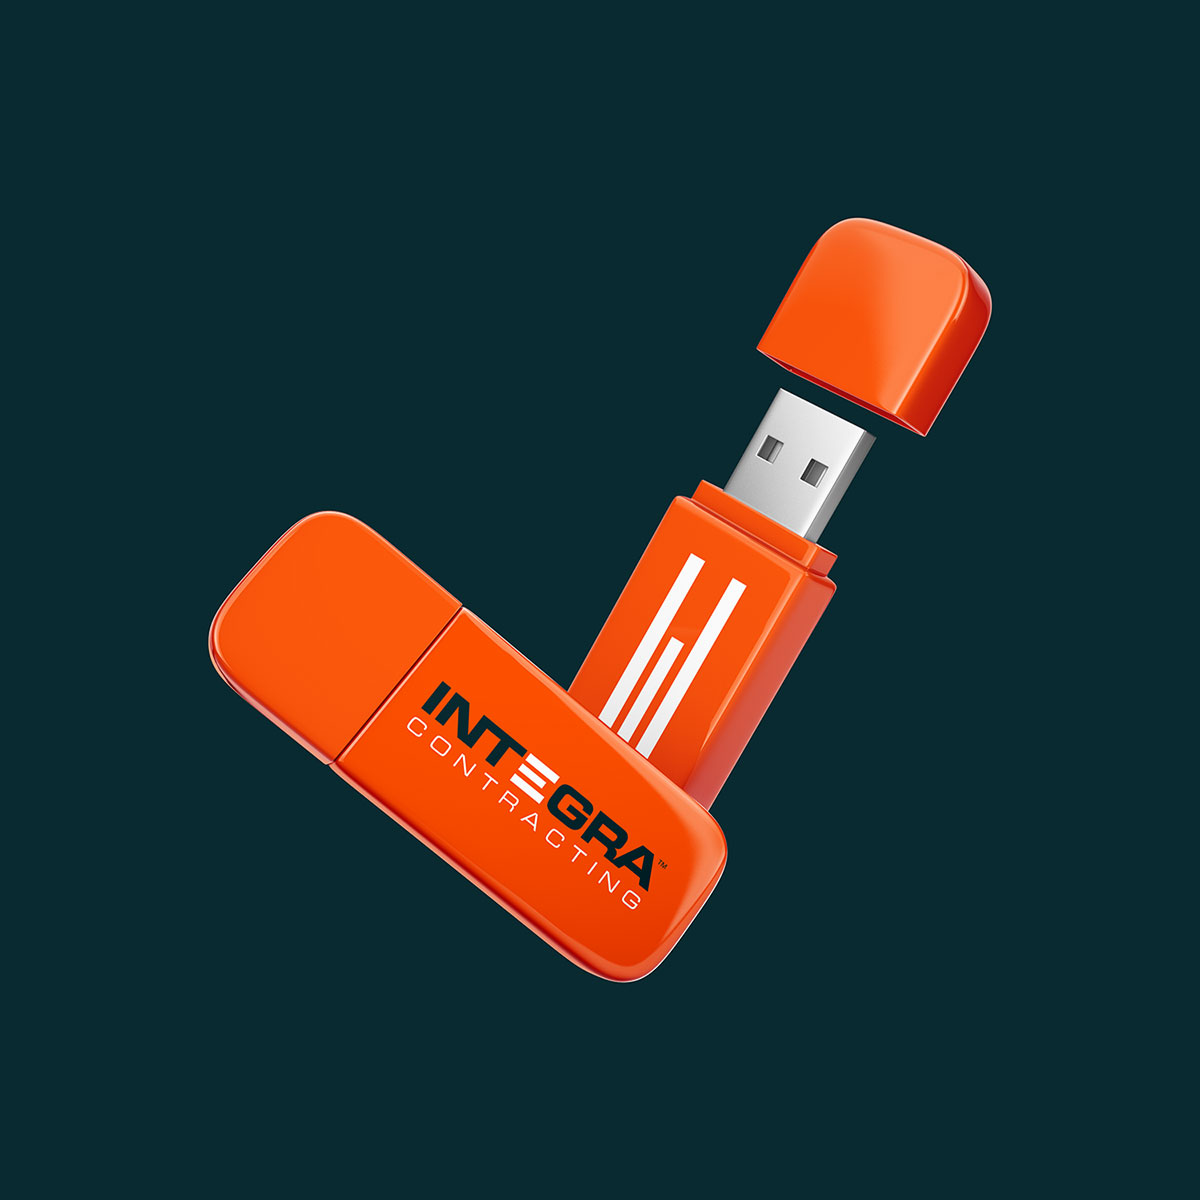 Integra branded flash drive design